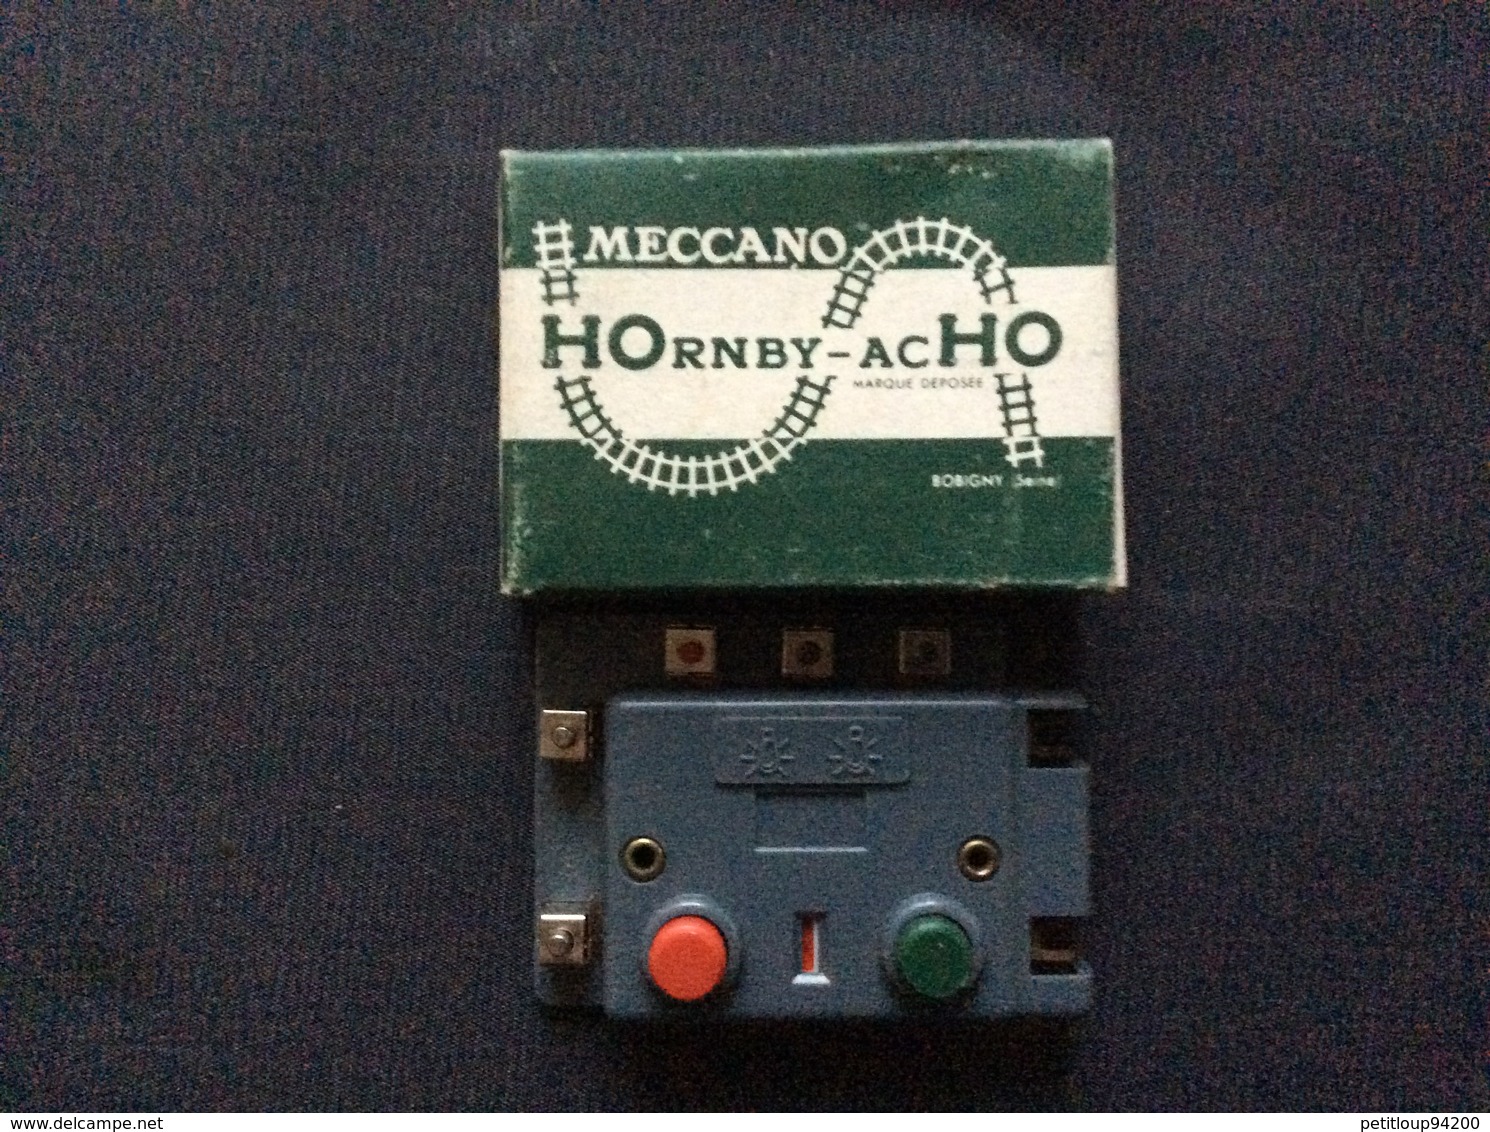 HORNBY-acHO MECCANO-TRIANG 1 Boîtier De Commande A Contact Permanent  Ref. 7840 - Digital Supplies And Equipment